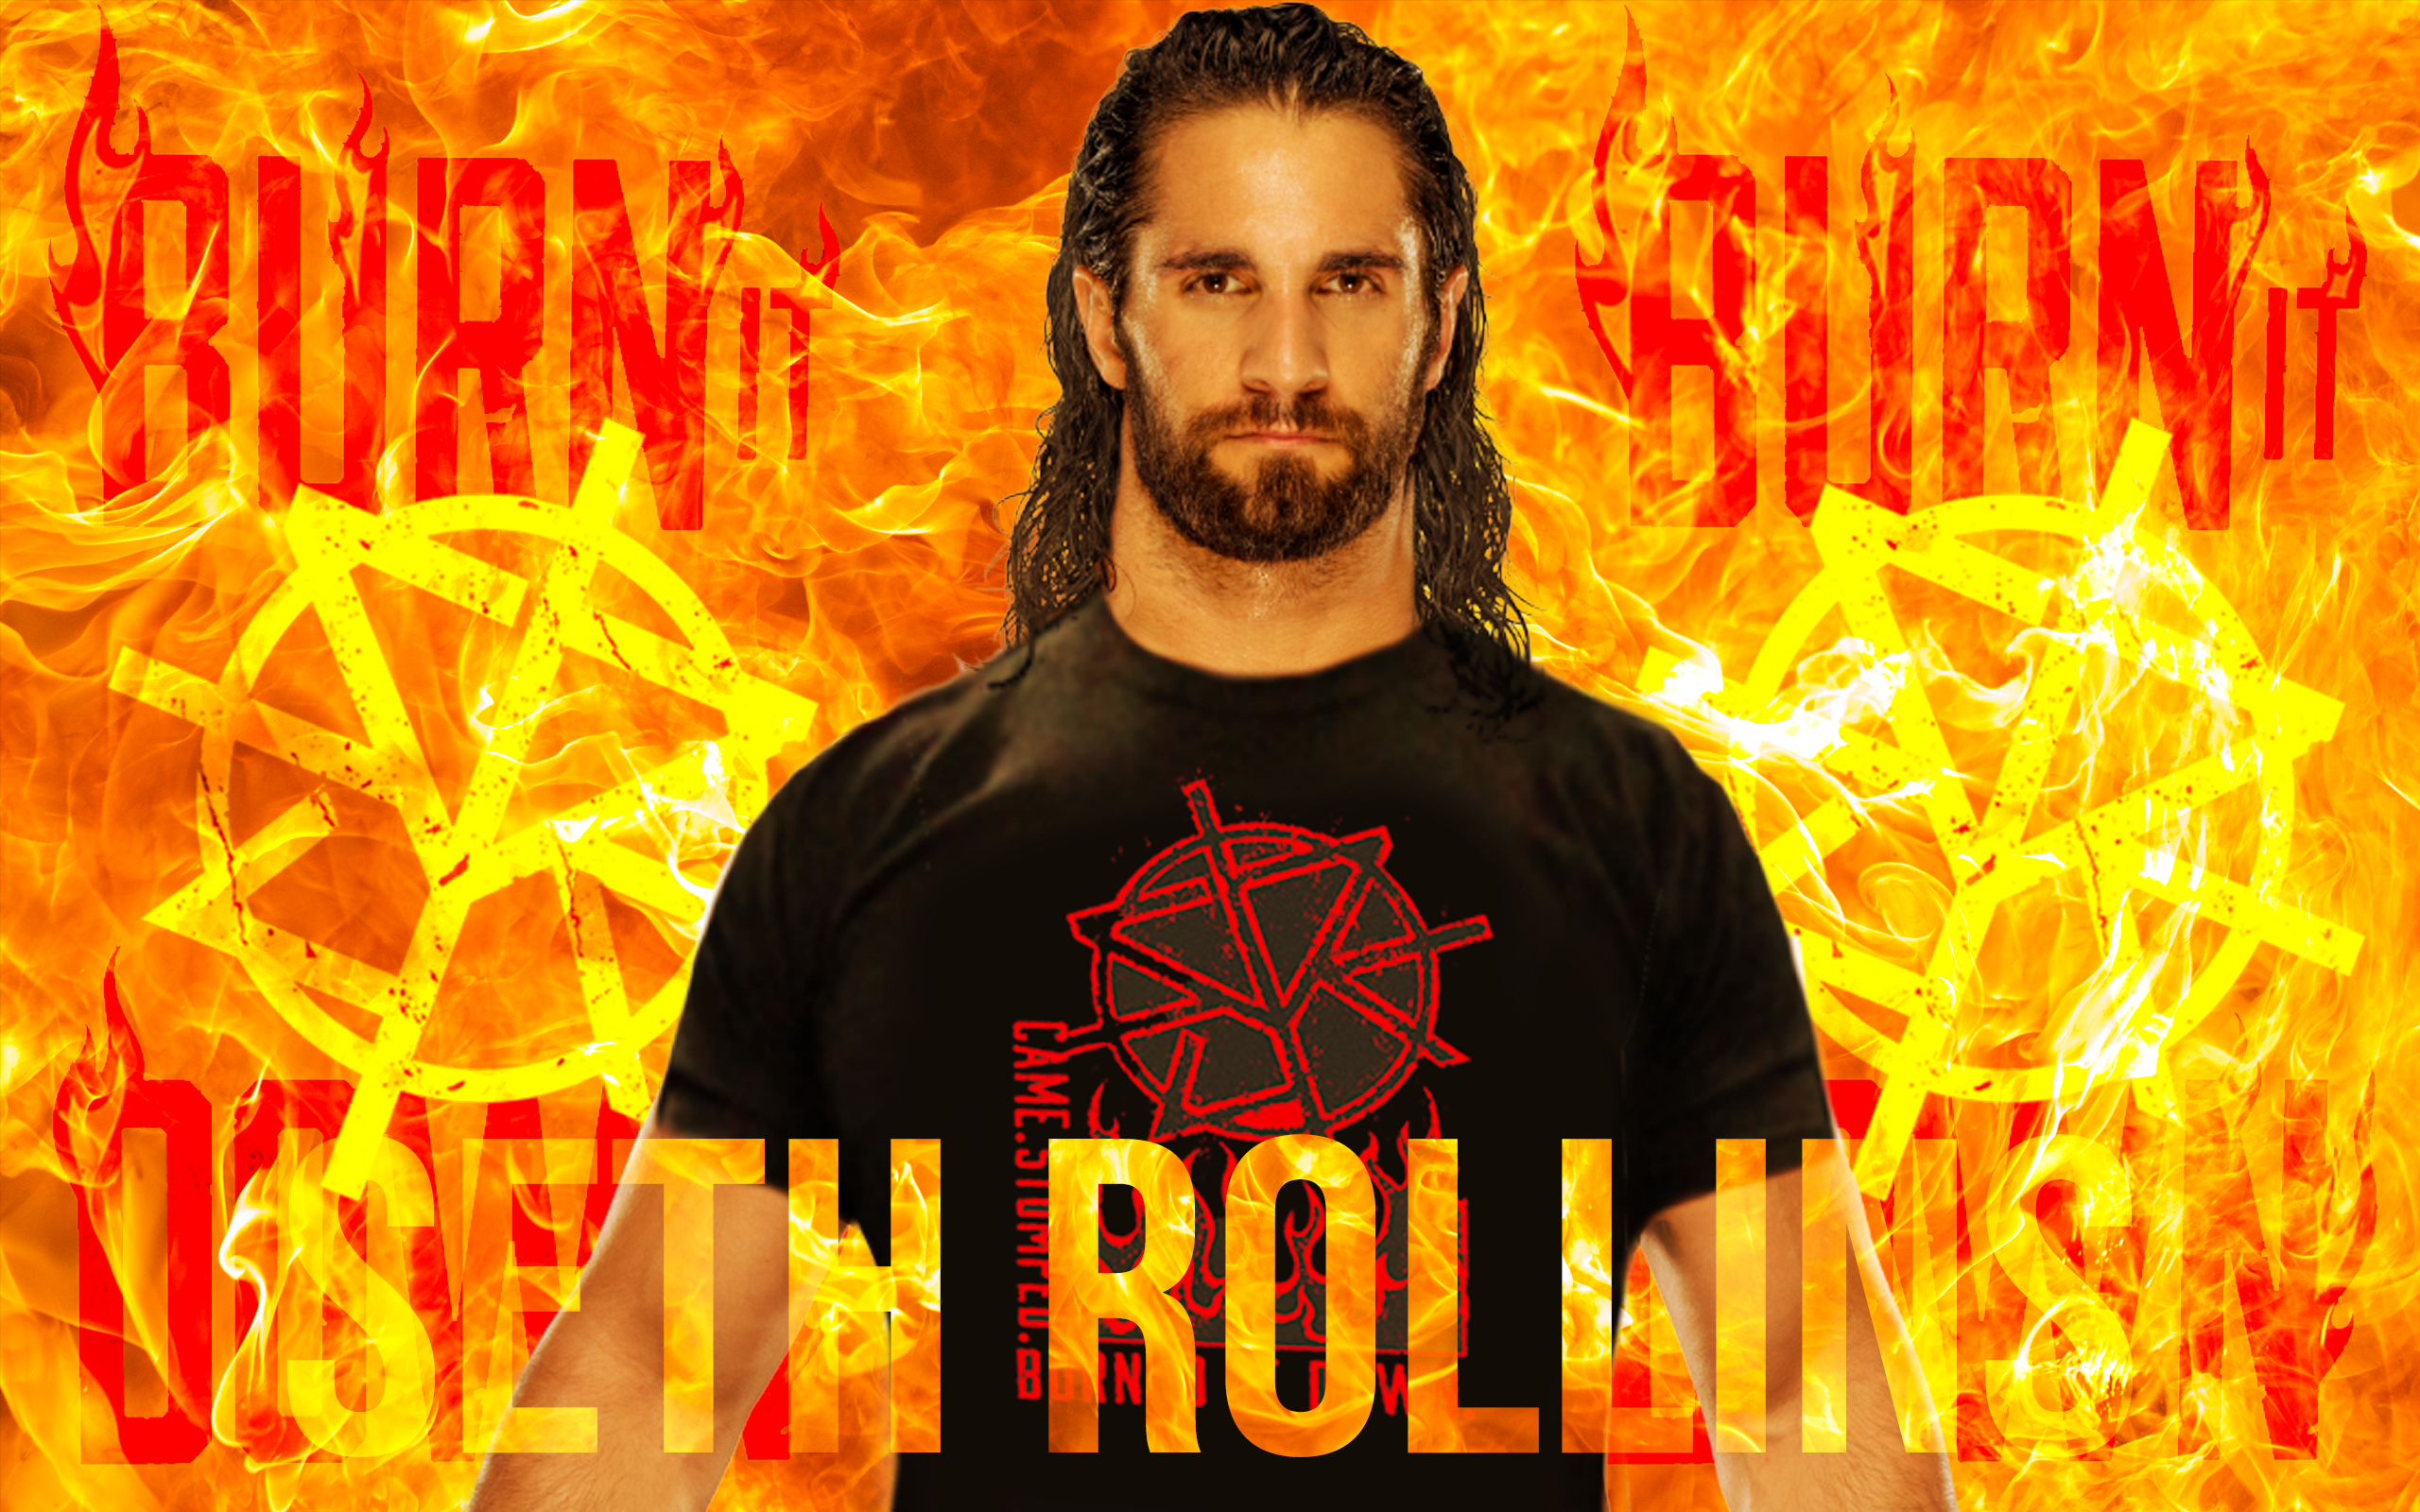 WWE Seth Rollins (Burn It Down) Wallpaper by itsJPolar on DeviantArt